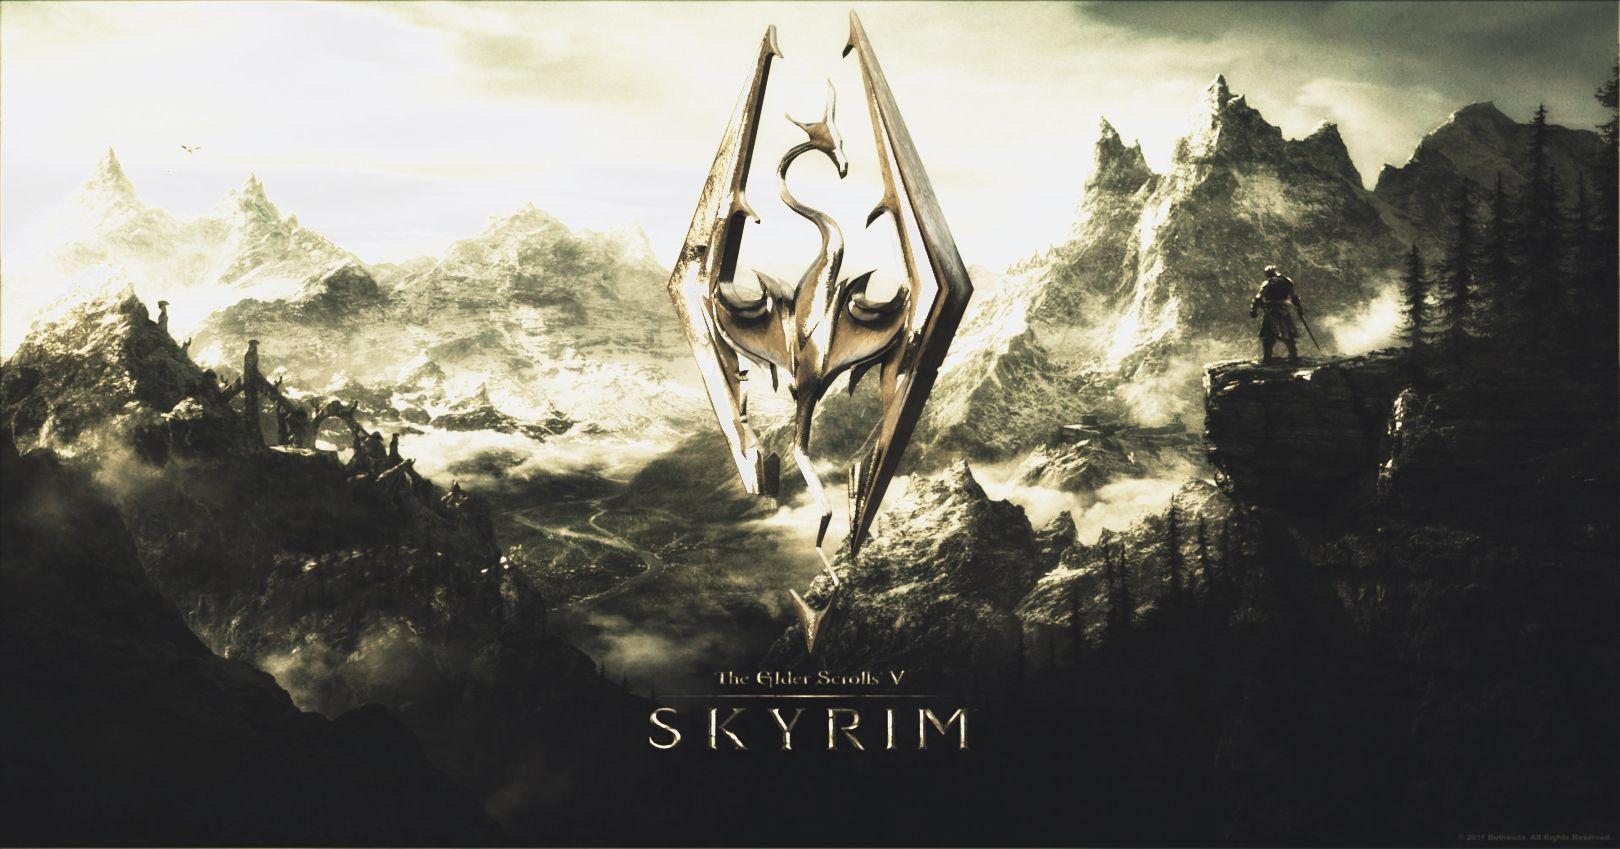 The Elder Scrolls Skyrim 3D Logo Image Fanart By Ronka Norghyr